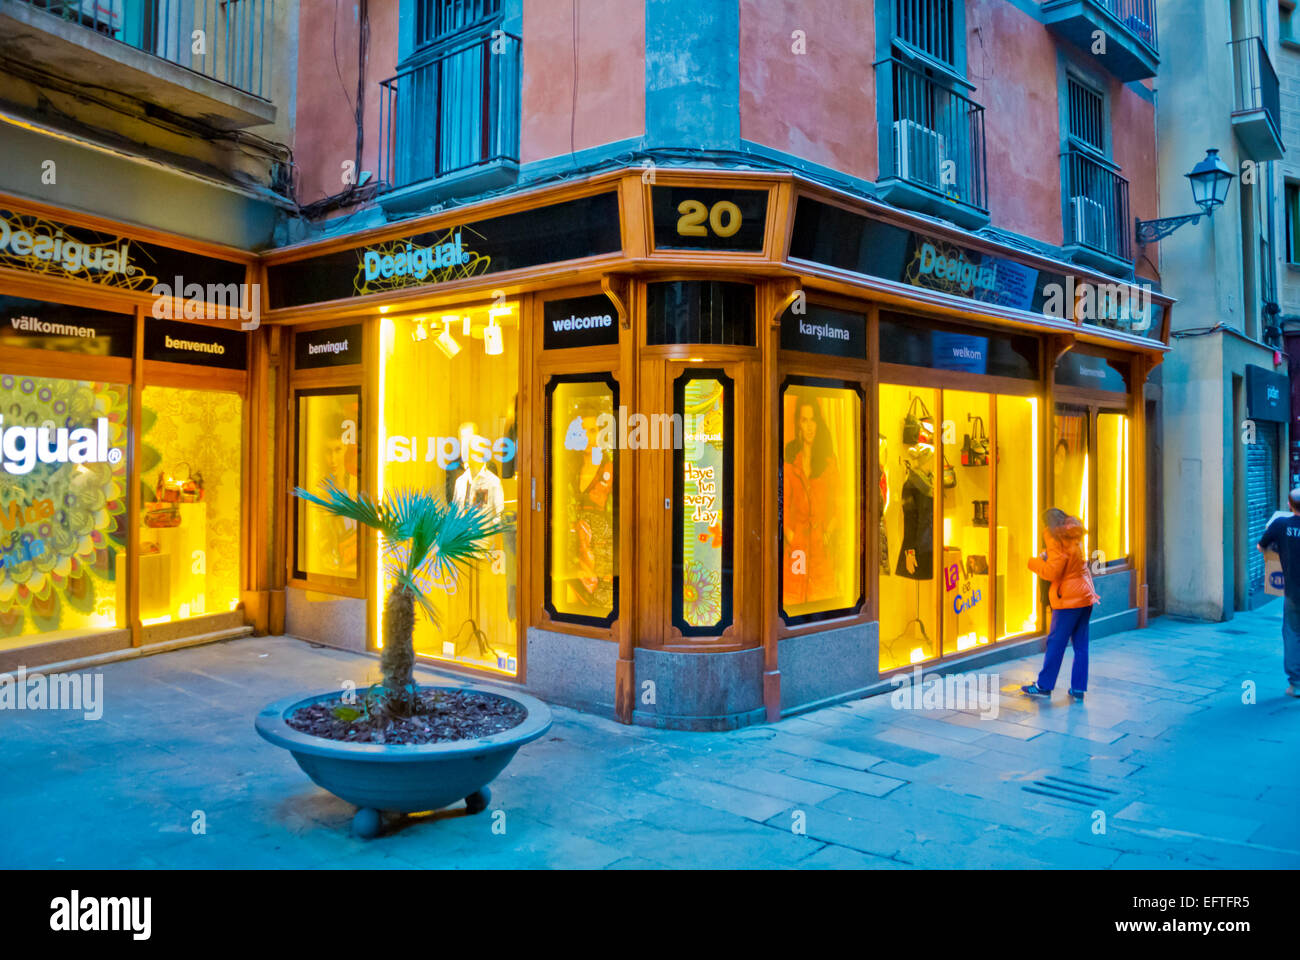 Desigual fashion clothing shop, Barri Gotic, Barcelona, Spain Stock Photo